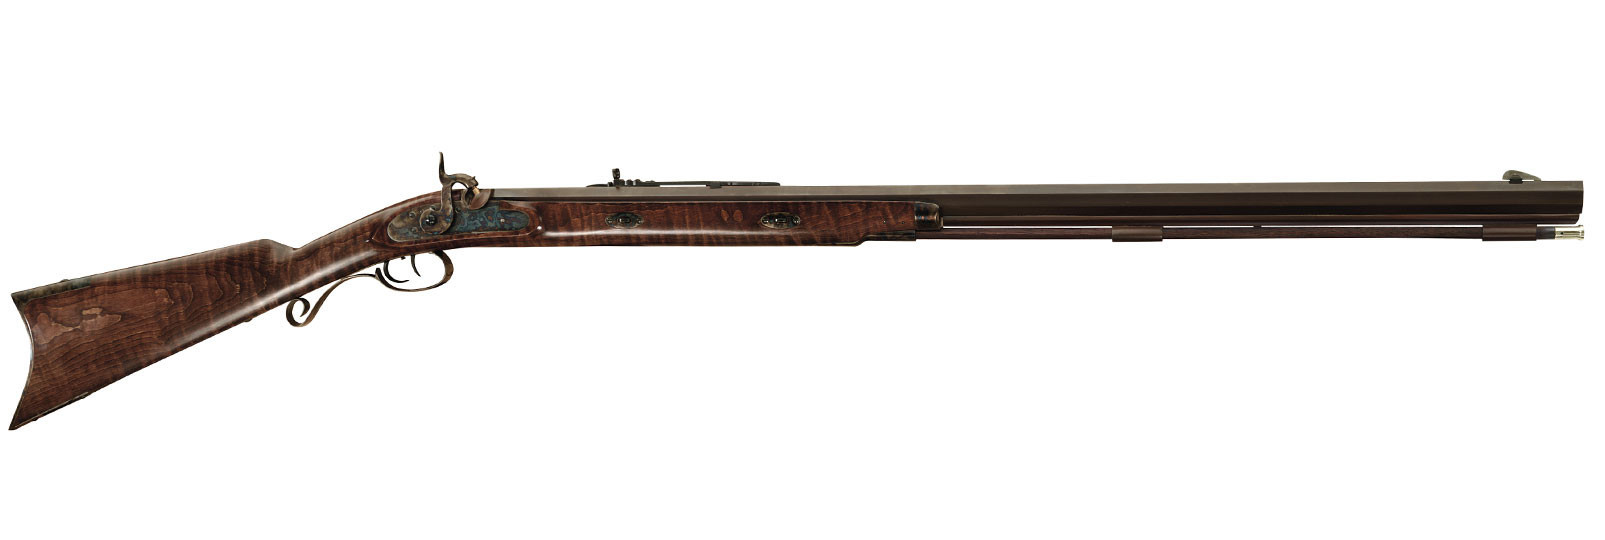 Missouri River Hawken "Maple" Rifle